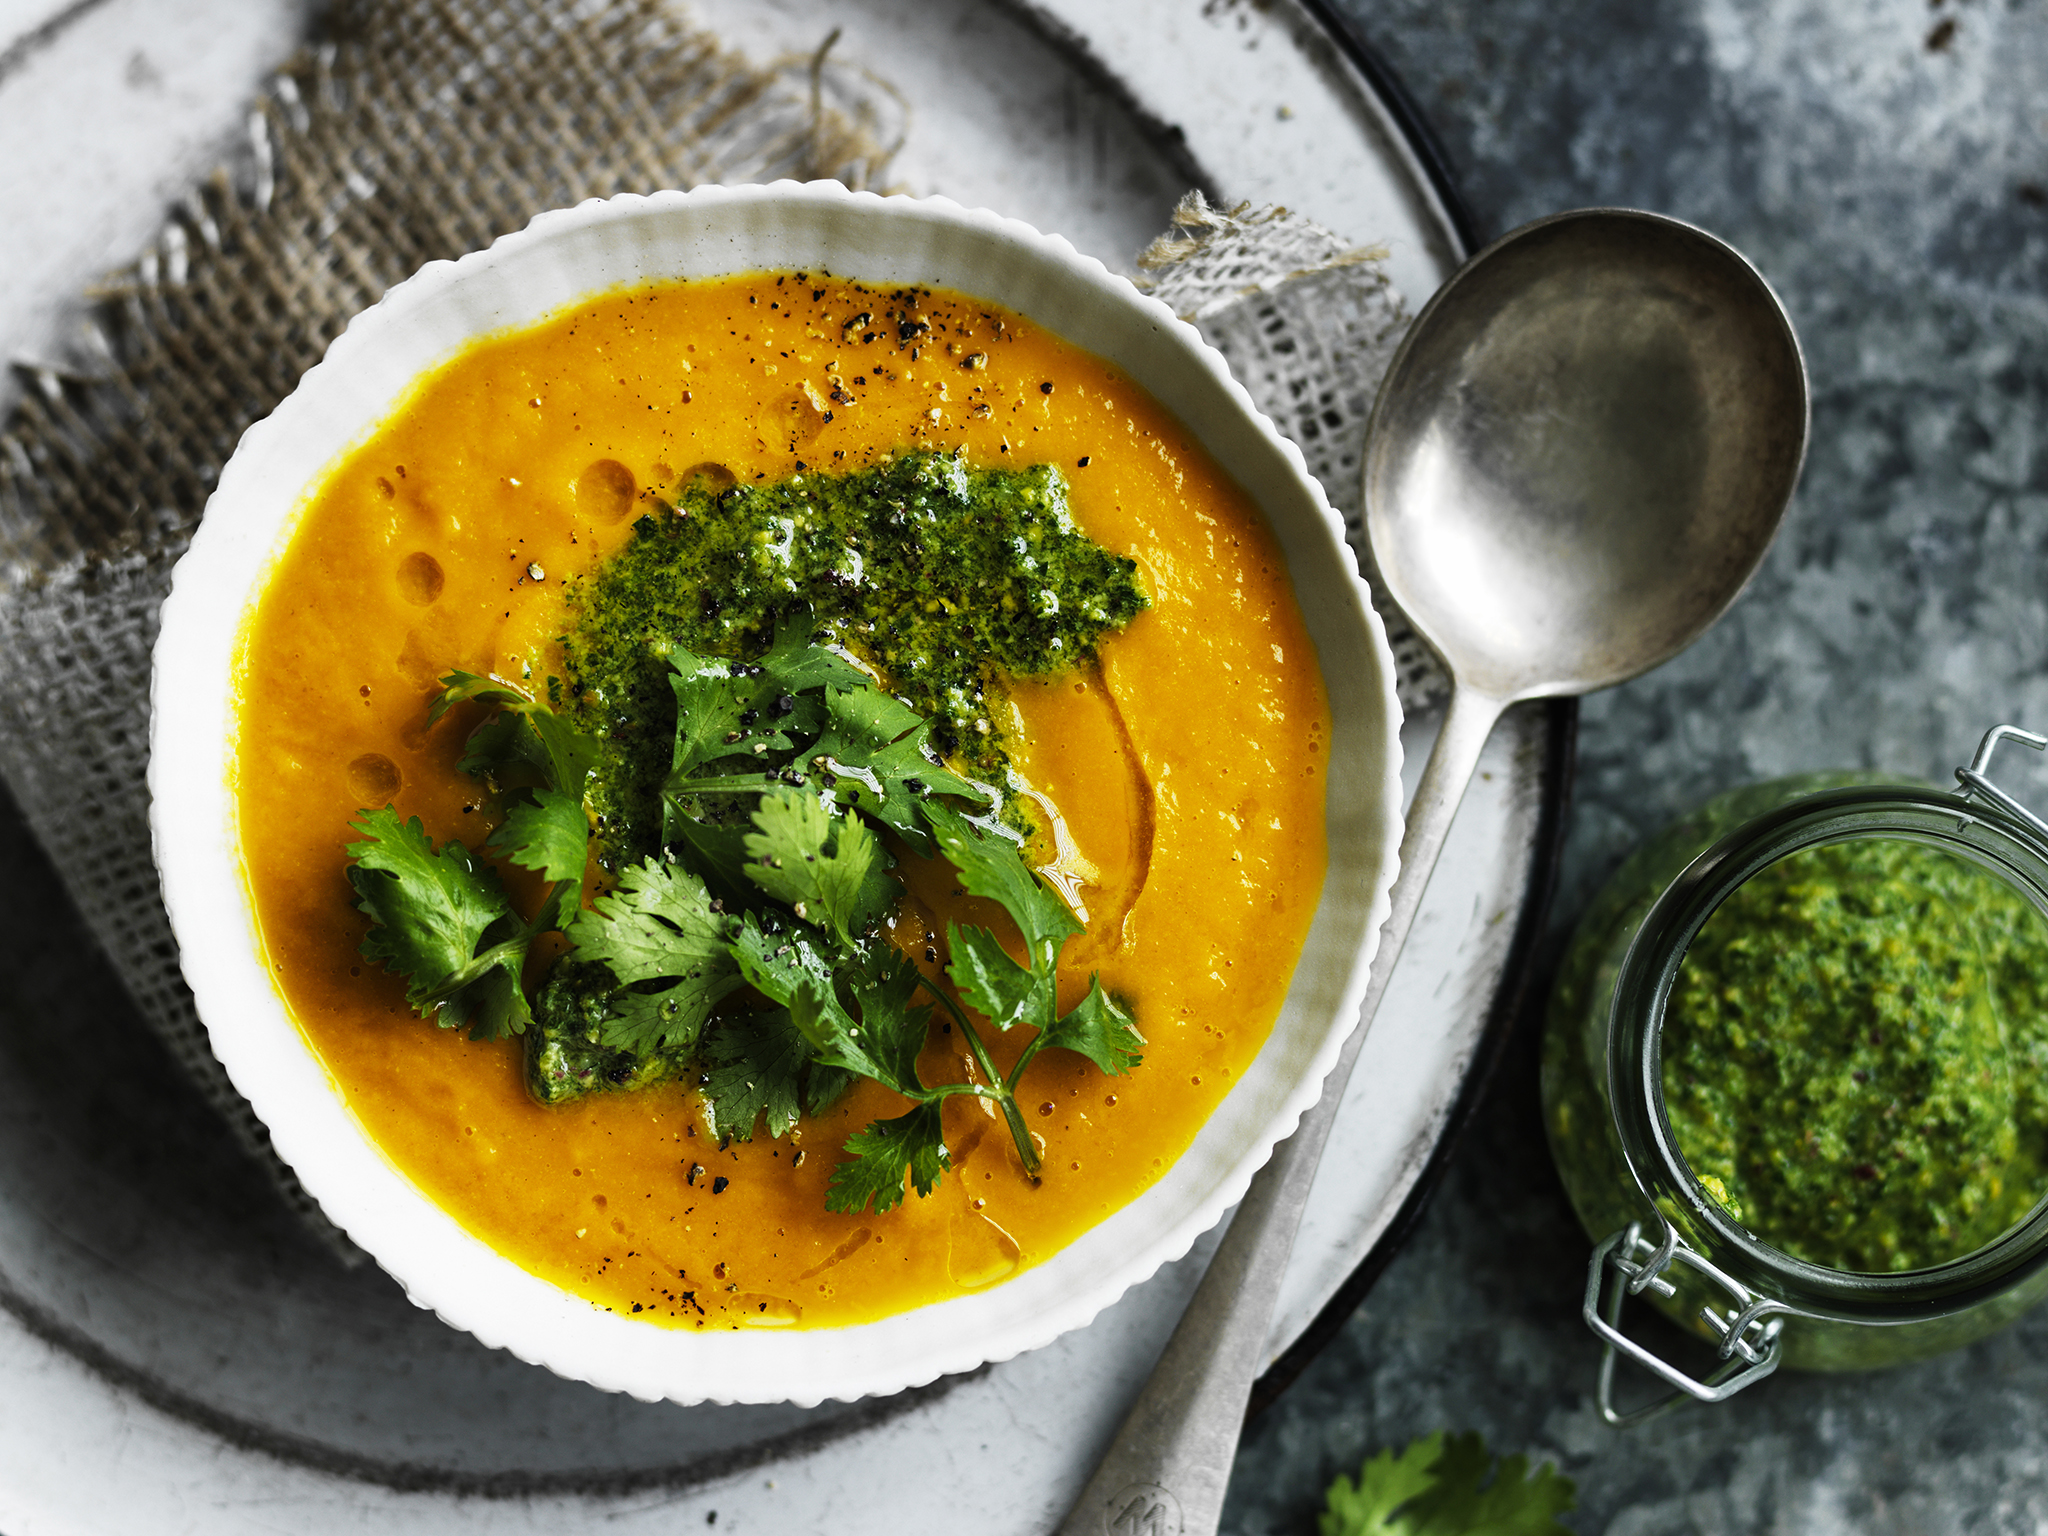 carrot and lentil soup vegan